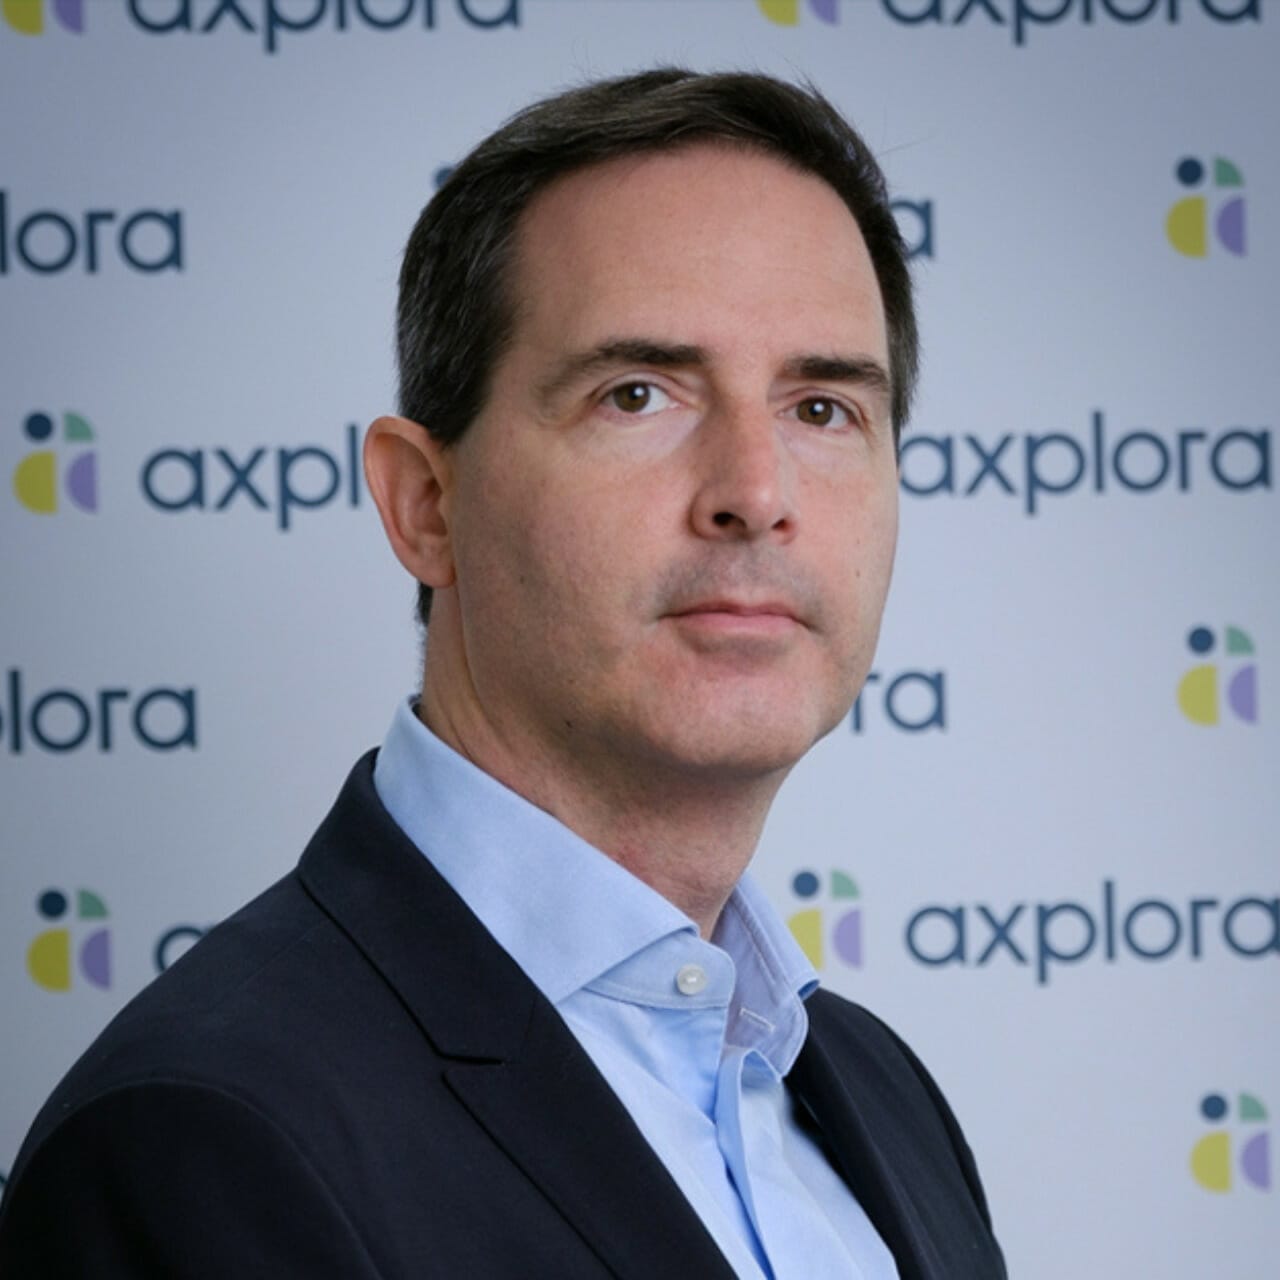 Pierre-Louis Mikus, Head of Legal at Axplora